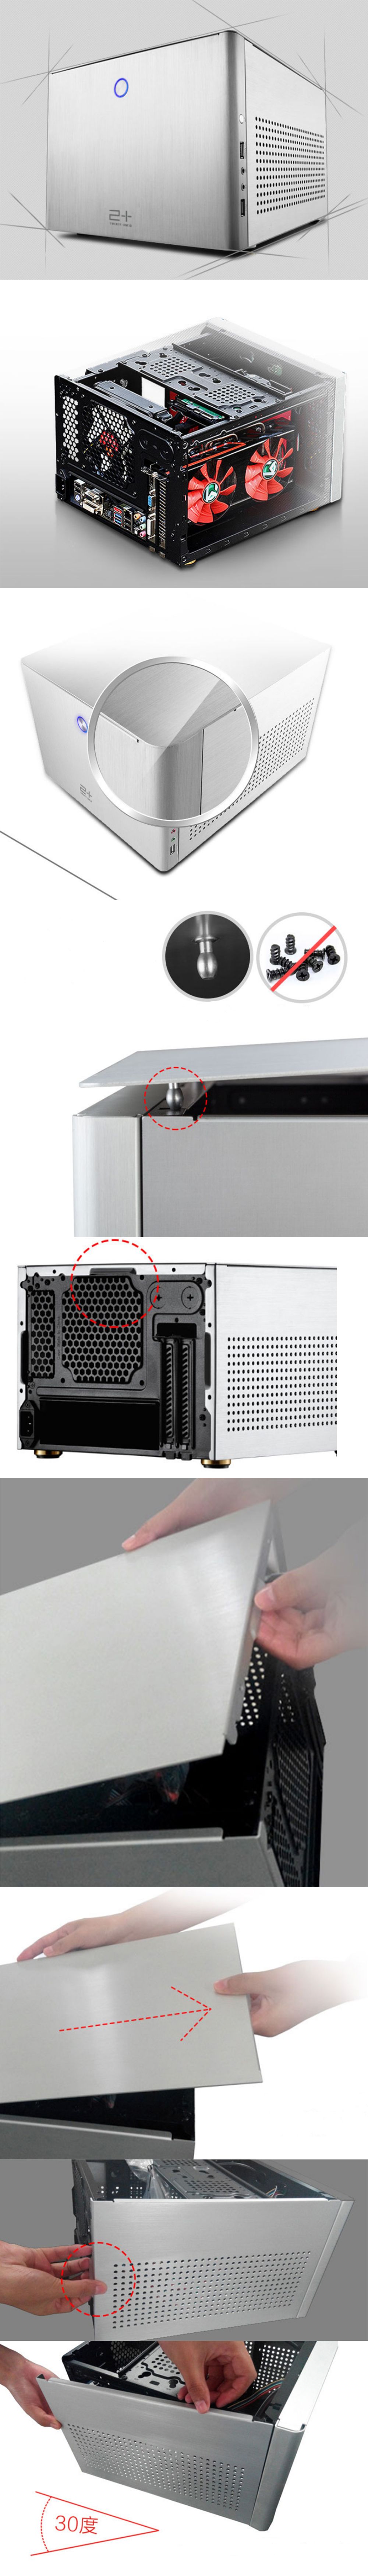 Golden-Field-N2-Aluminum-mATX-mini-ITX-Mini-Computer-Case-Support-275mm-Graphics-Card-Desktop-Chassi-1572054